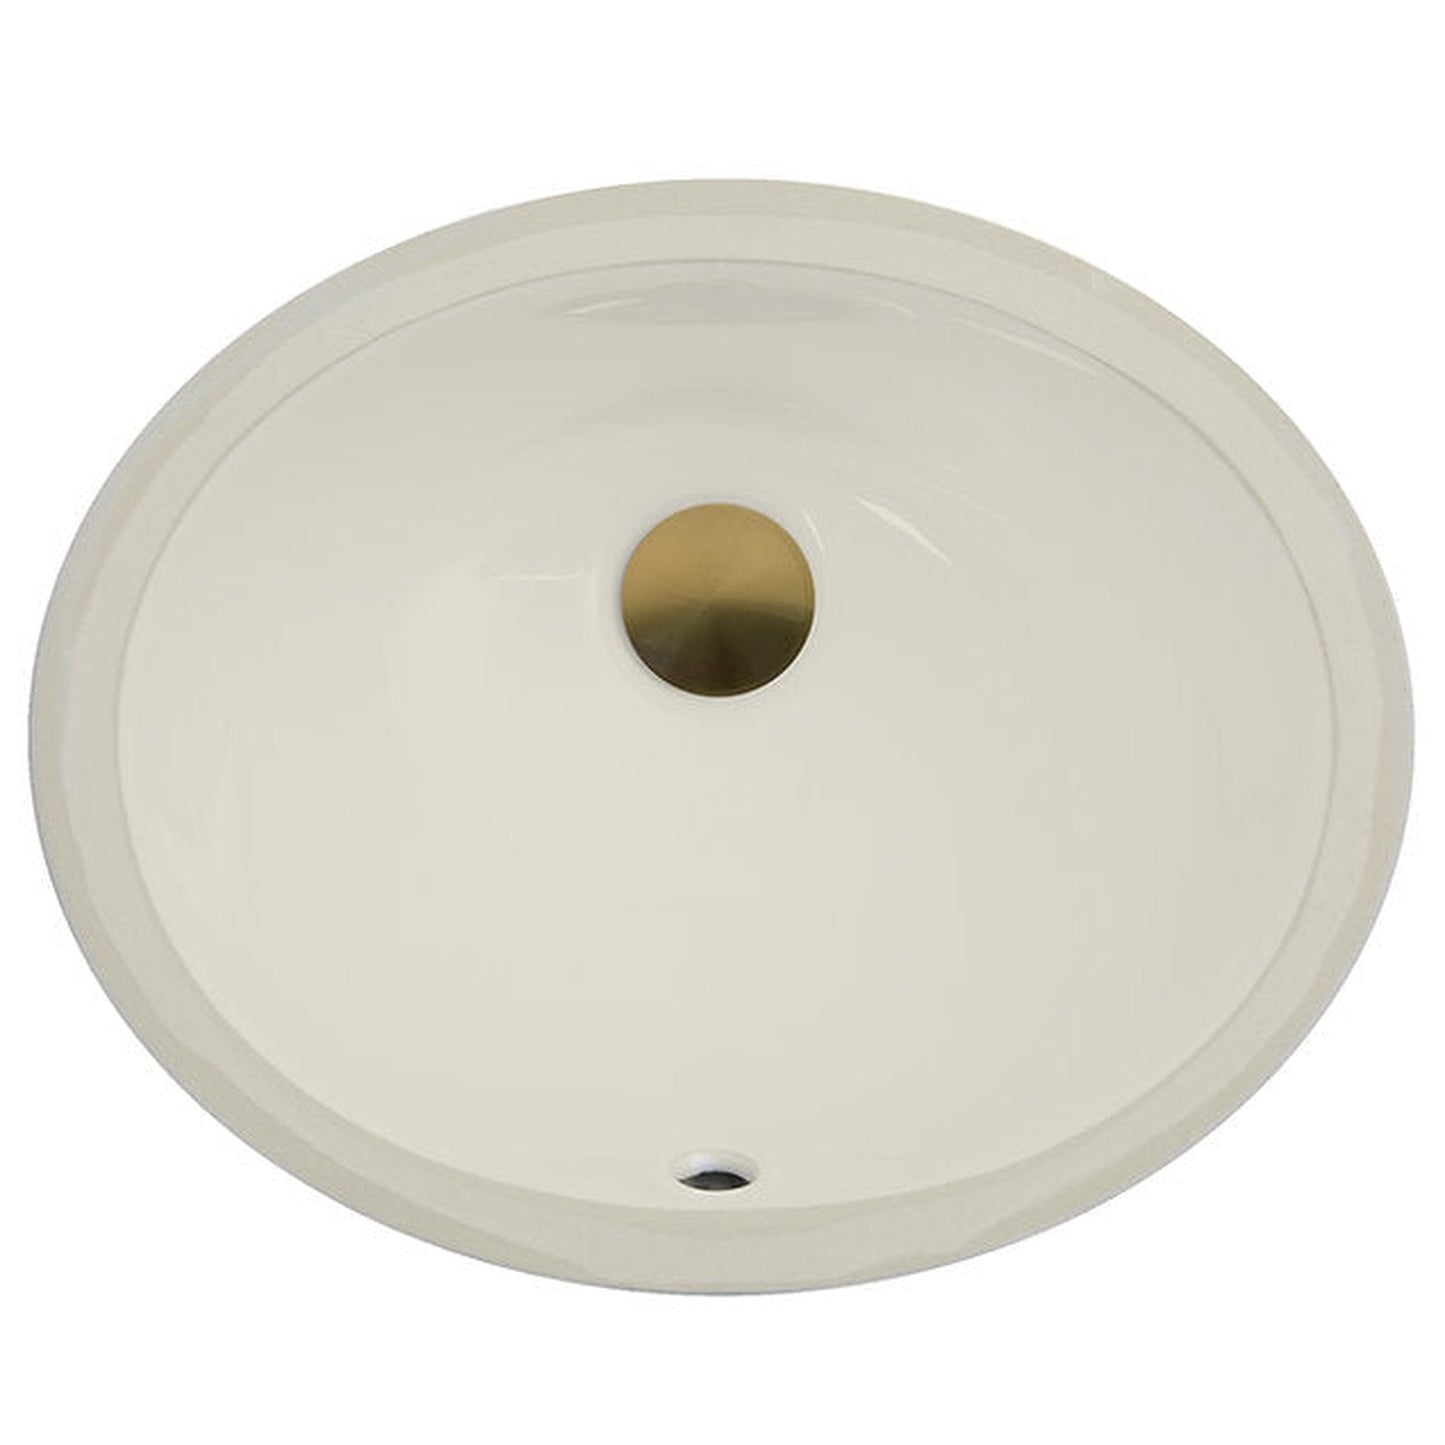 Nantucket Sinks Great Point 15" W x 12" D Oval Porcelain Enamel Glaze Undermount Ceramic Sink In Bisque With Oveflow